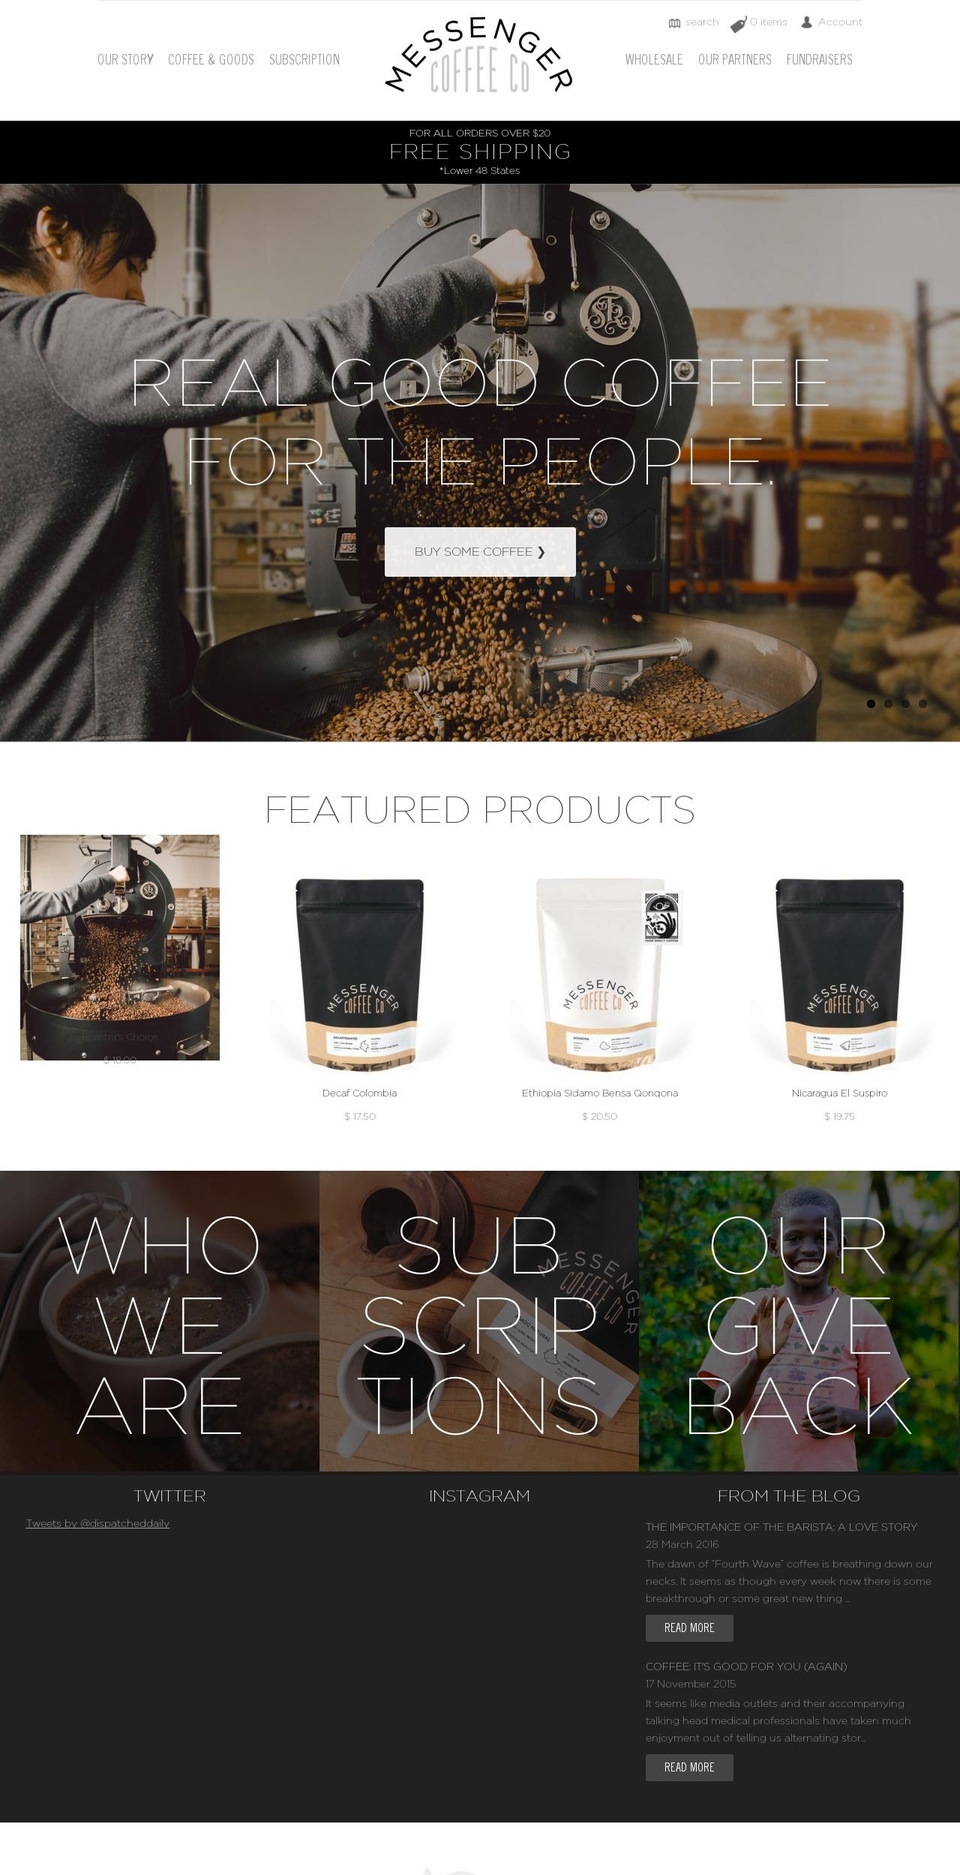 messengercoffee.co shopify website screenshot